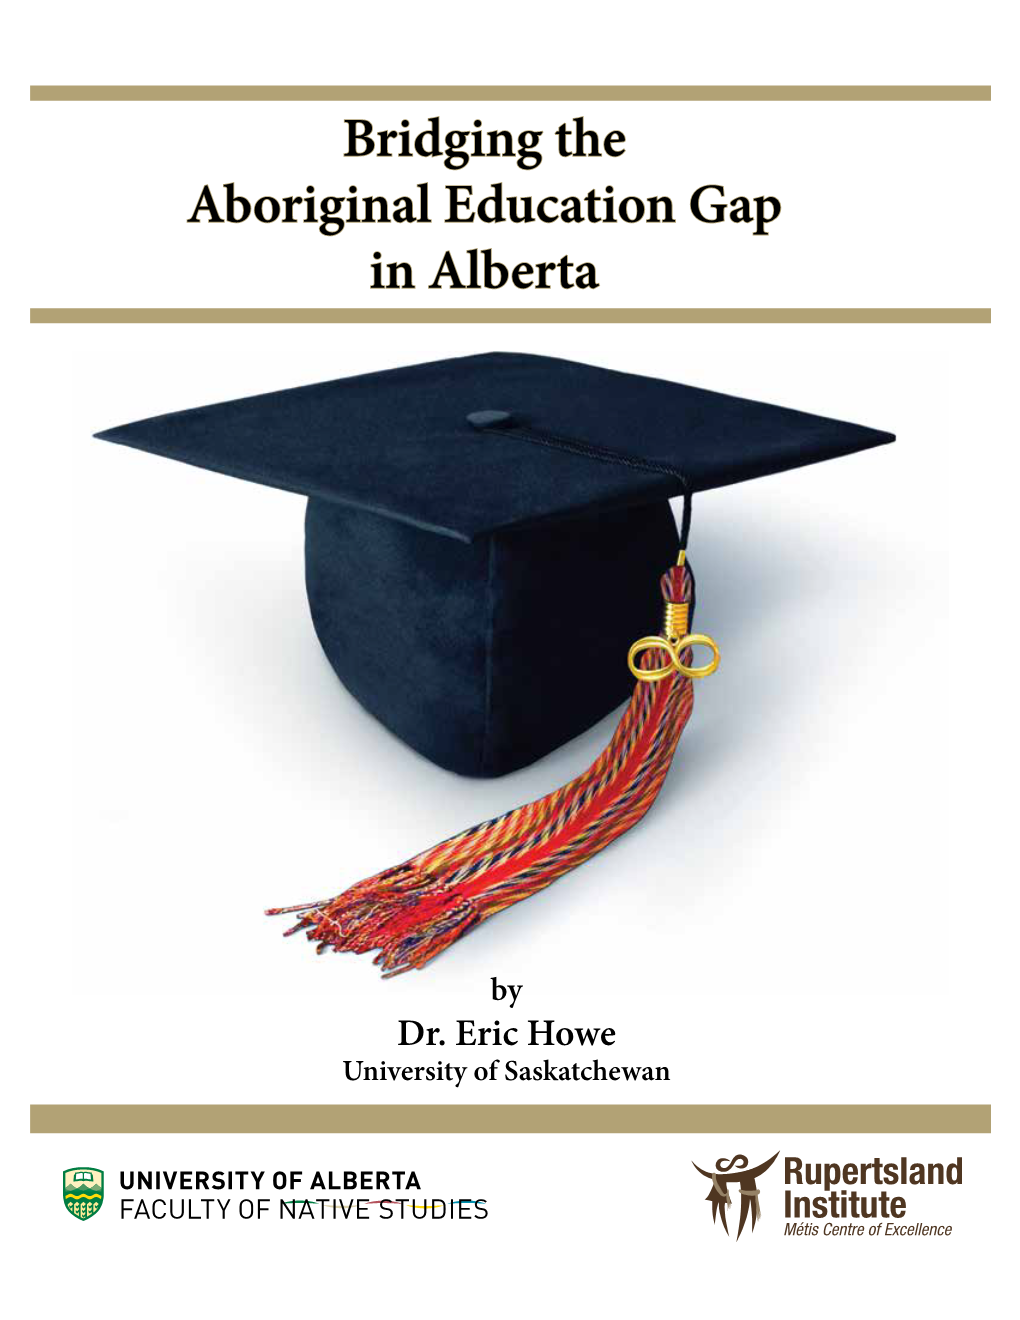 Bridging the Aboriginal Education Gap in Alberta